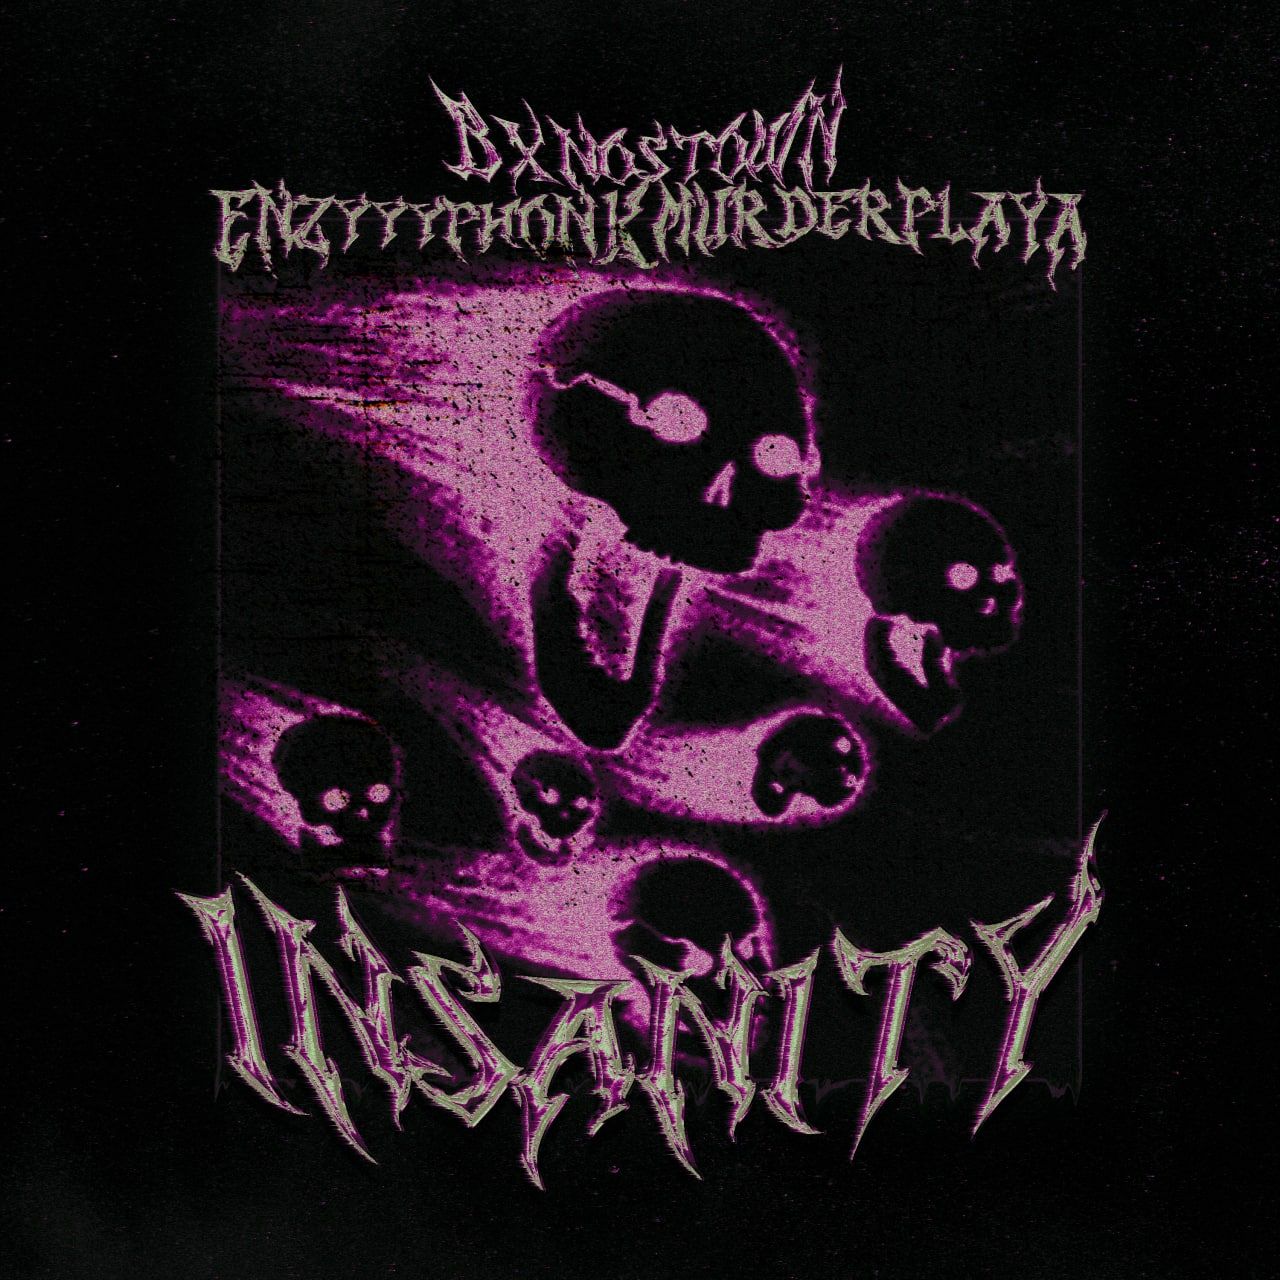 Download Insanity-BXNOSTOWN & ENZYYYPHONK & MURDERPLAYA